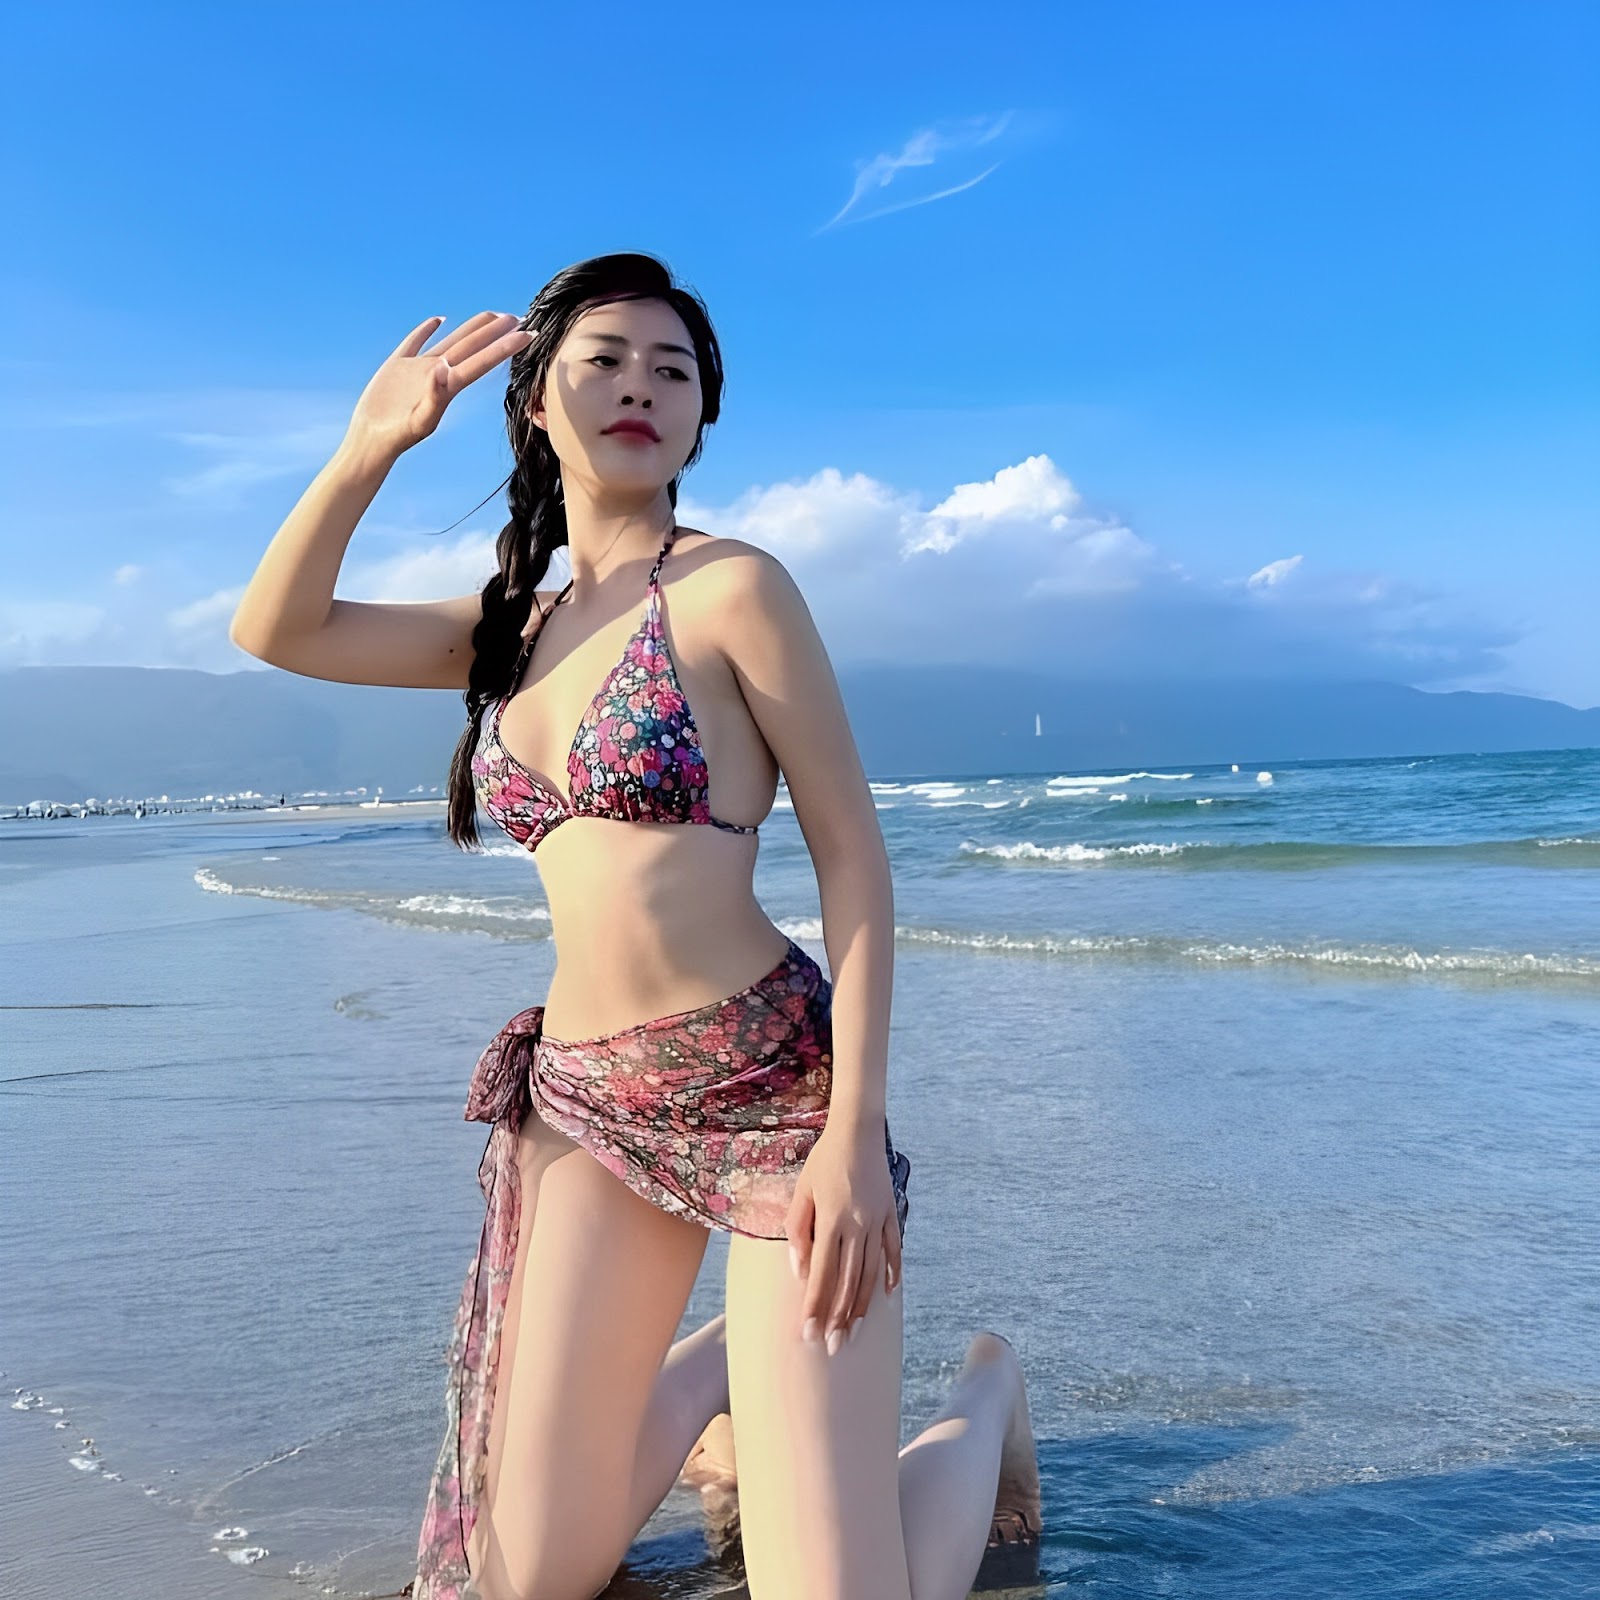 Centore Bikini & Fashion Photoshoot In Tulum